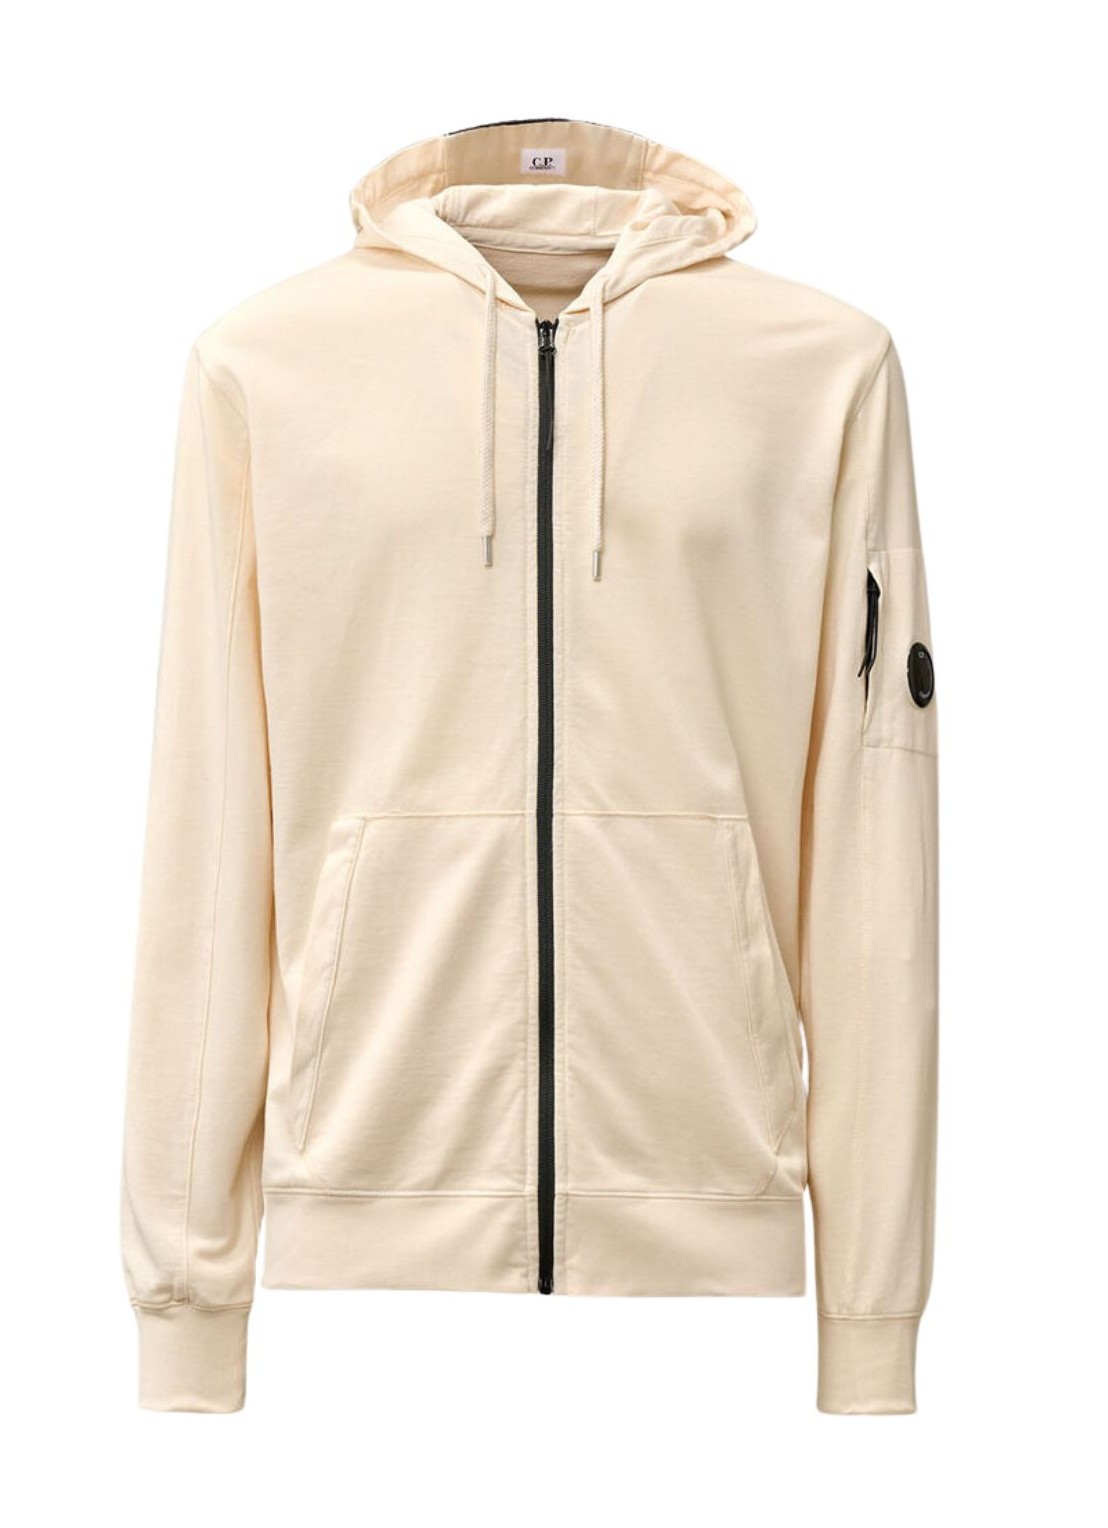 Sudadera c.p.company sweater man light fleece zipped hoodie 16cmss034a002246g 402 talla L
 